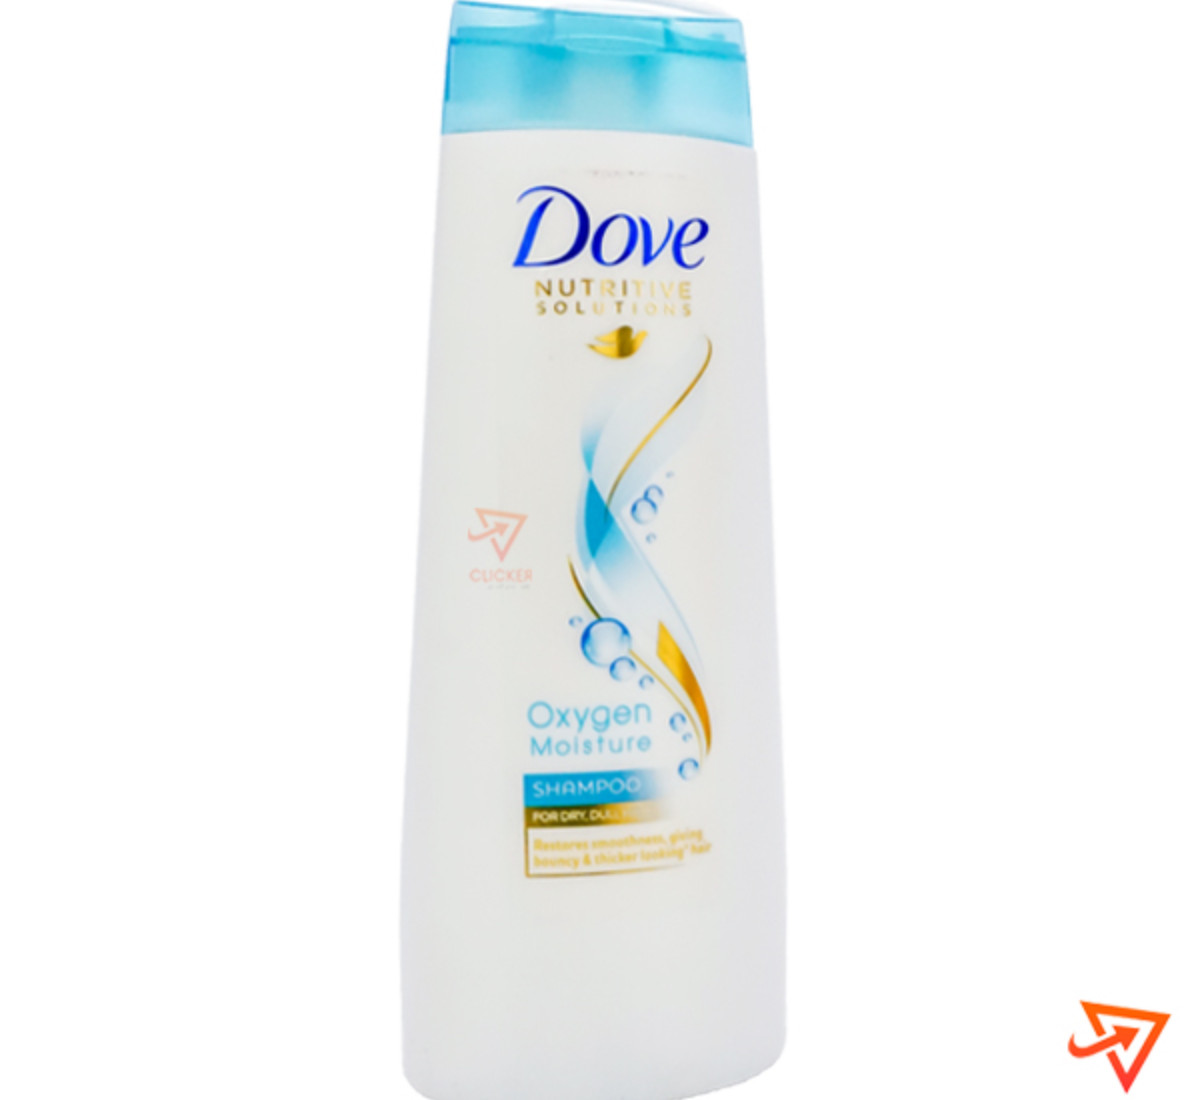 Clicker product 180ml DOVE oxygen moisture shampoo 1100